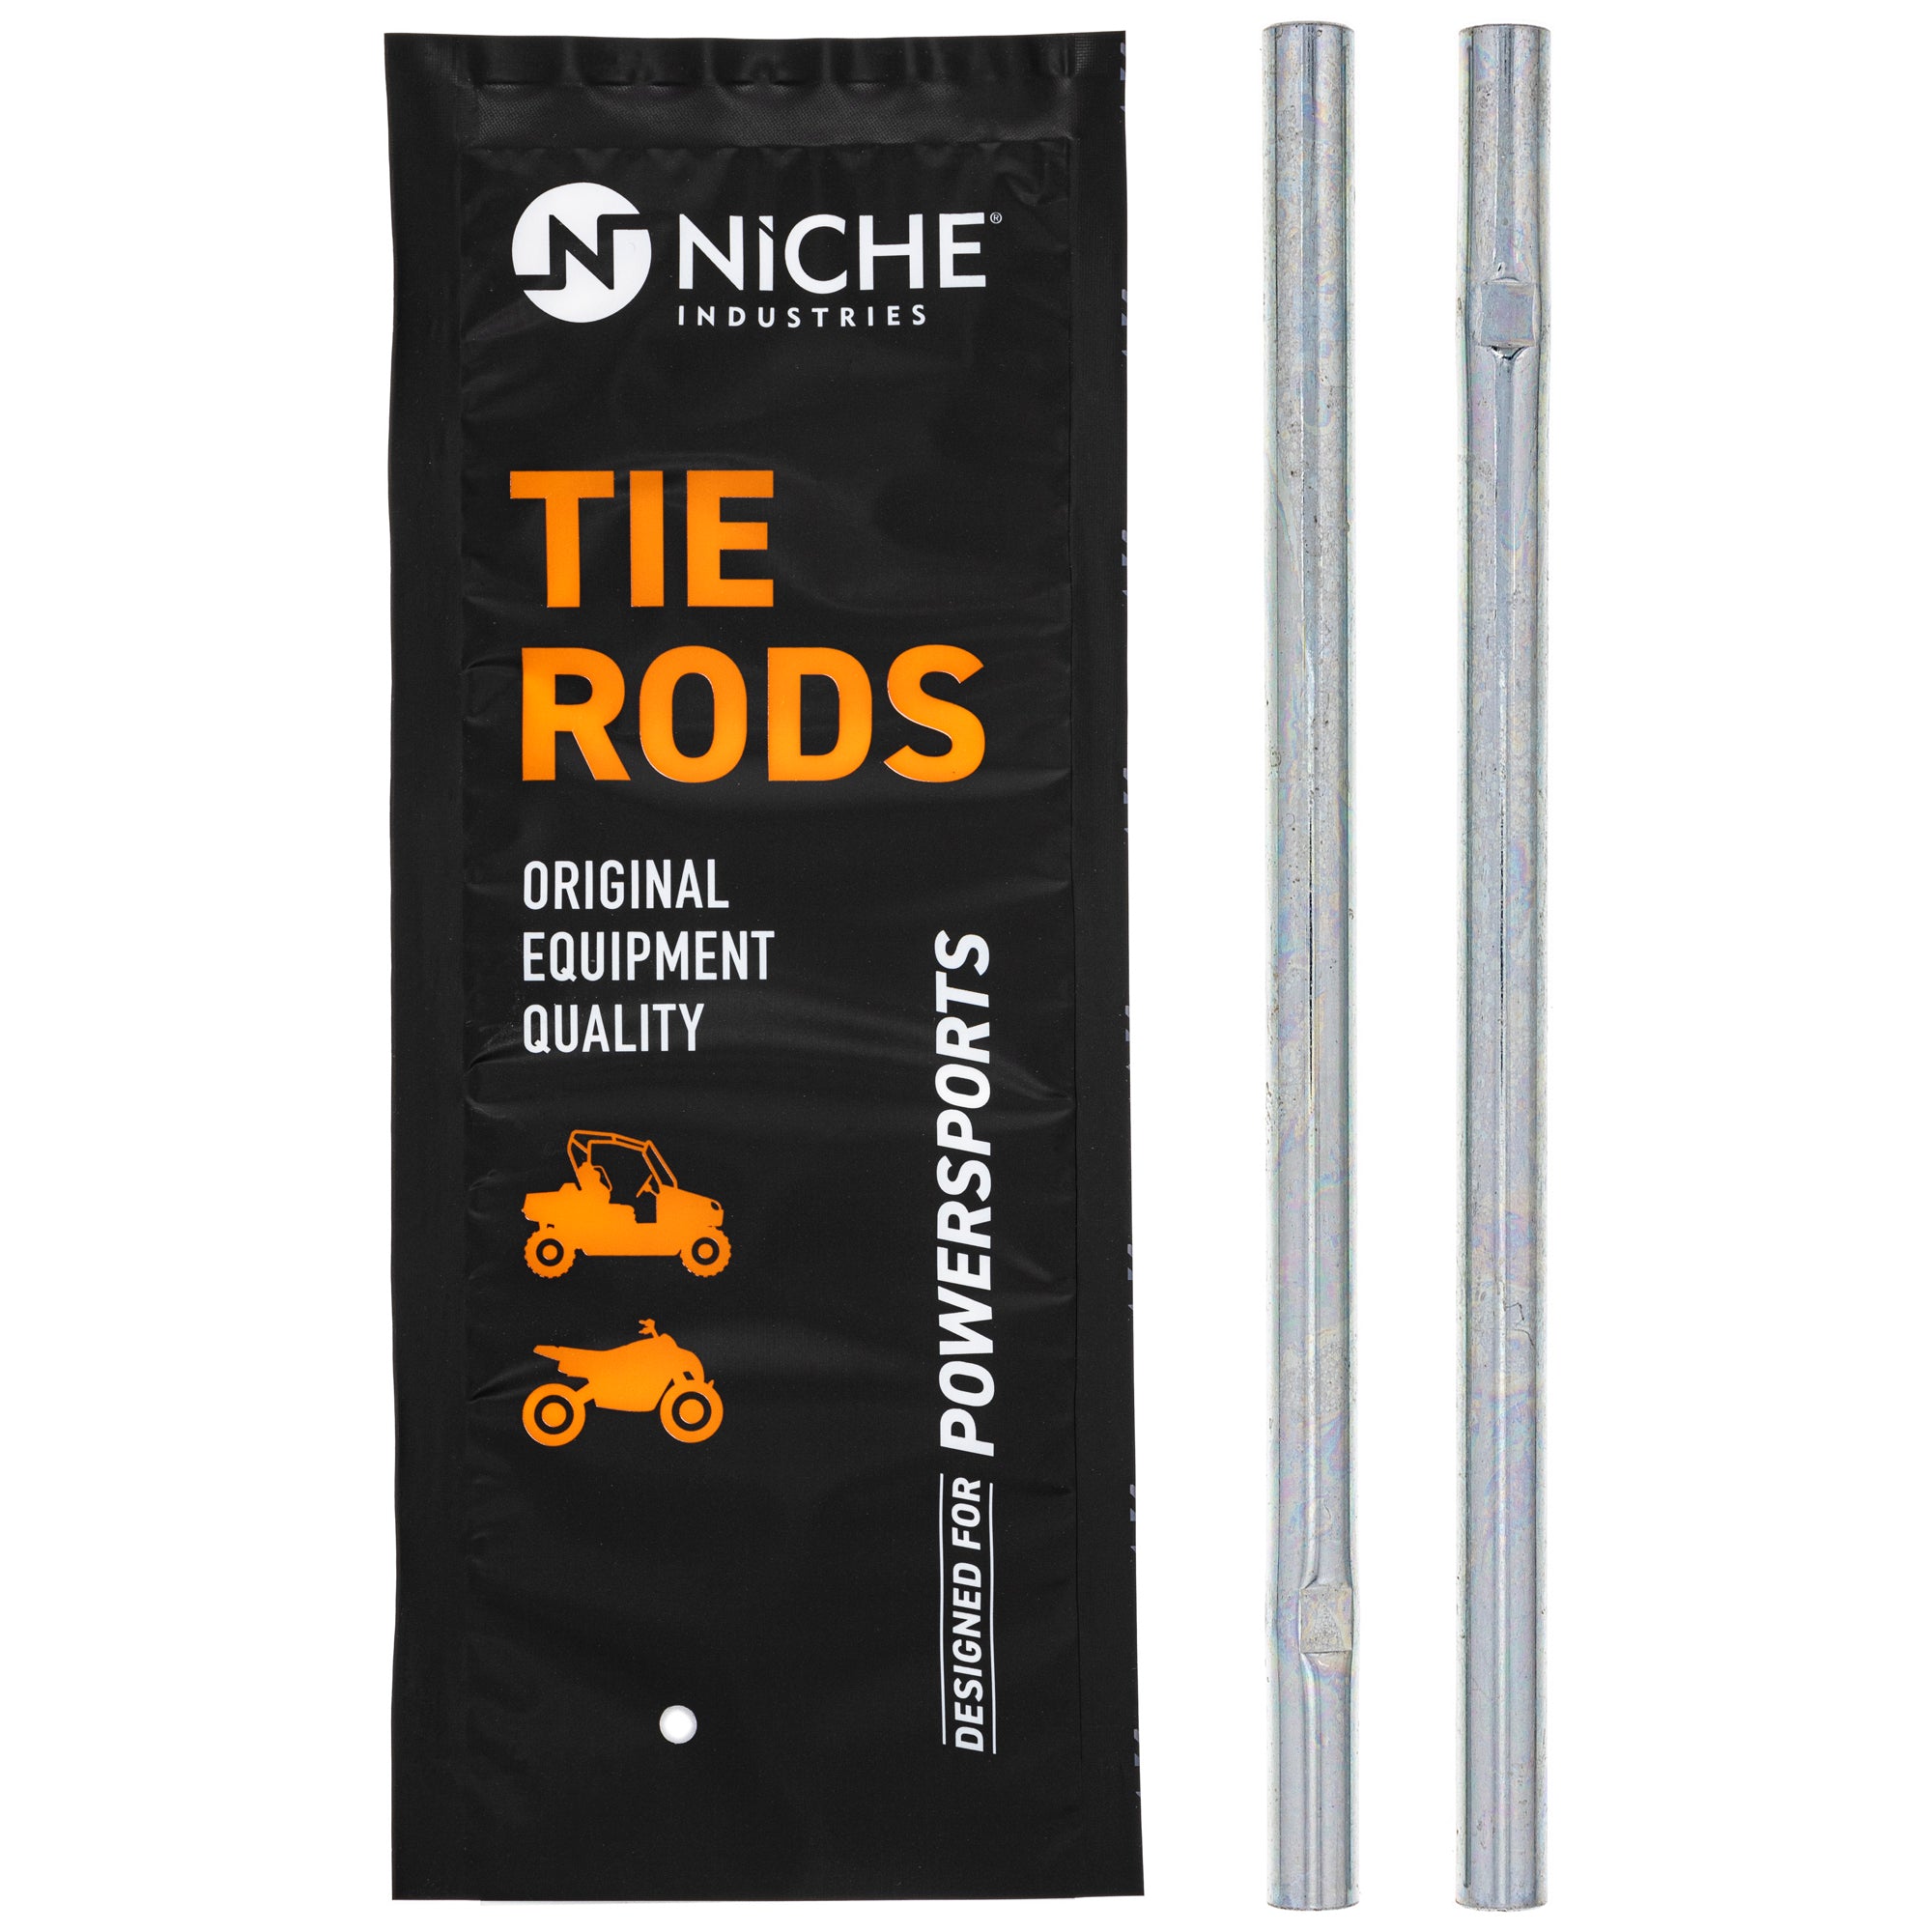 Tie Rods Kit for Arctic Cat Textron Cat NICHE 519-KTR2285B